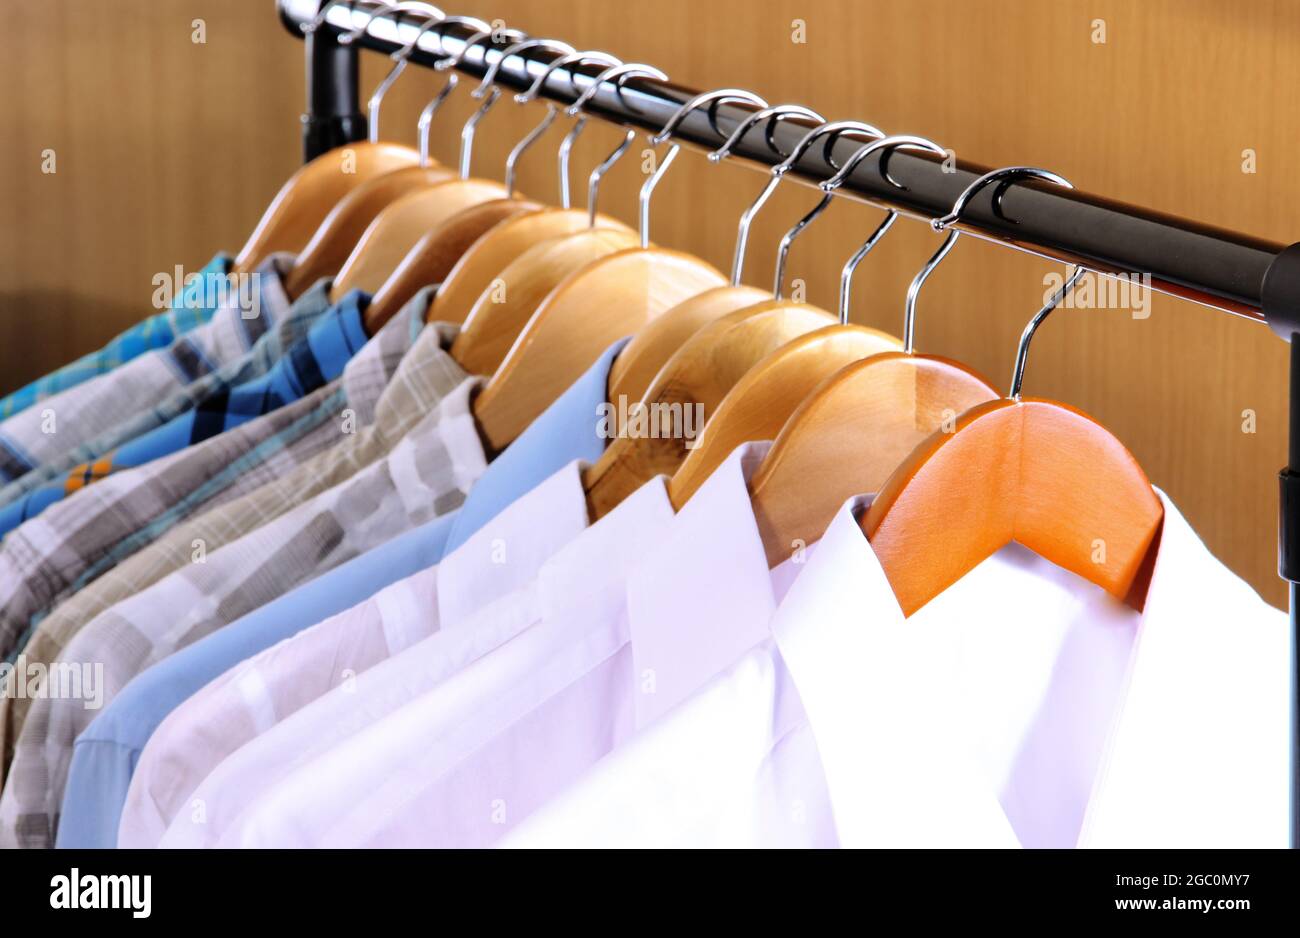 Herren Hemden auf Kleiderbügel im Schrank Stockfotografie - Alamy